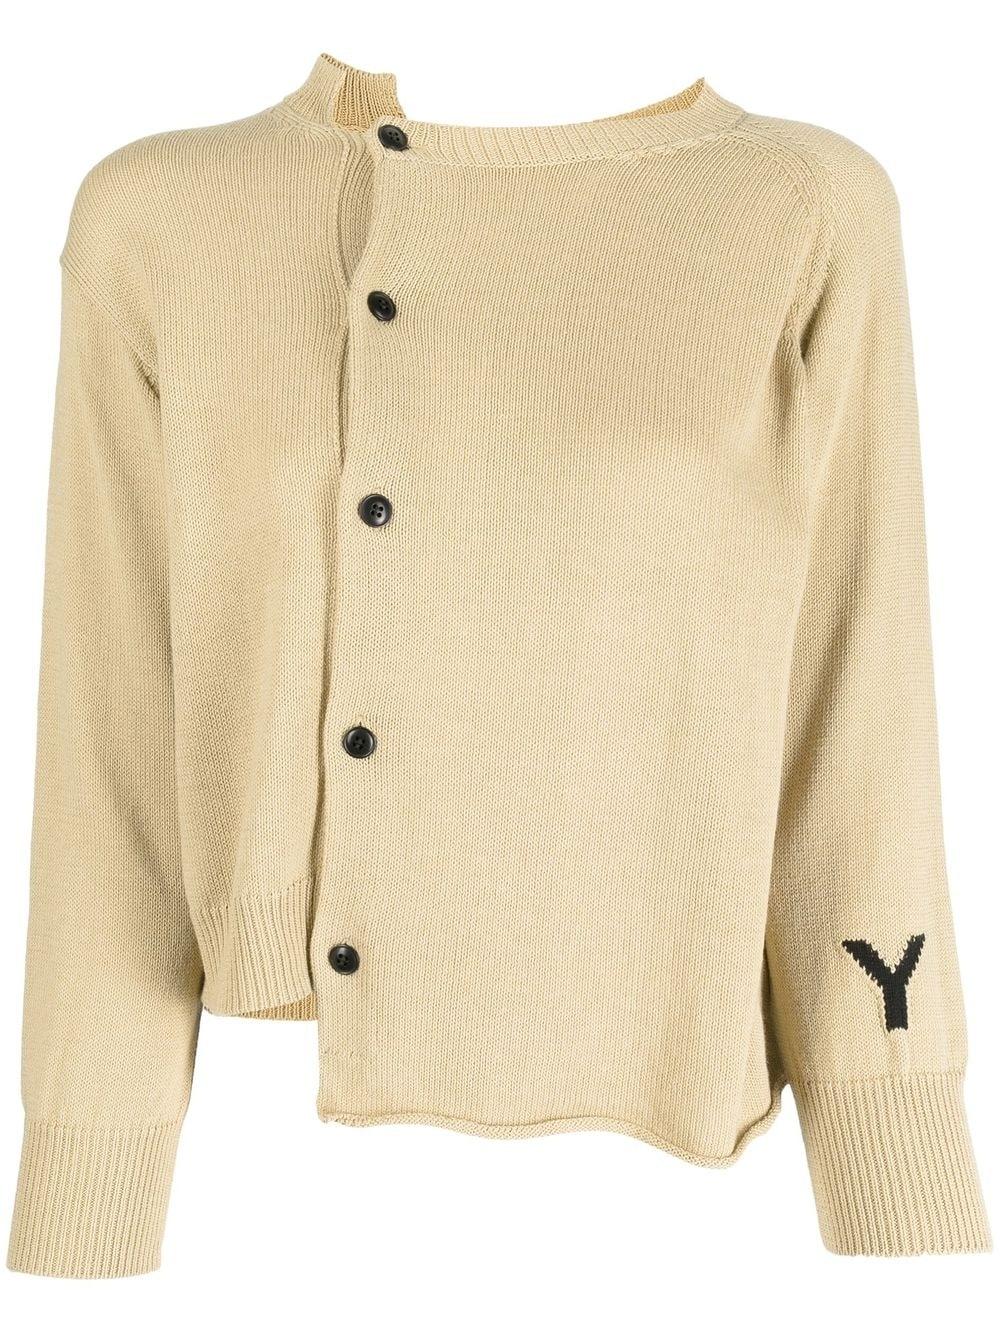 Y's Yohji Yamamoto Asymmetric Knitted Cardigan in Natural | Lyst